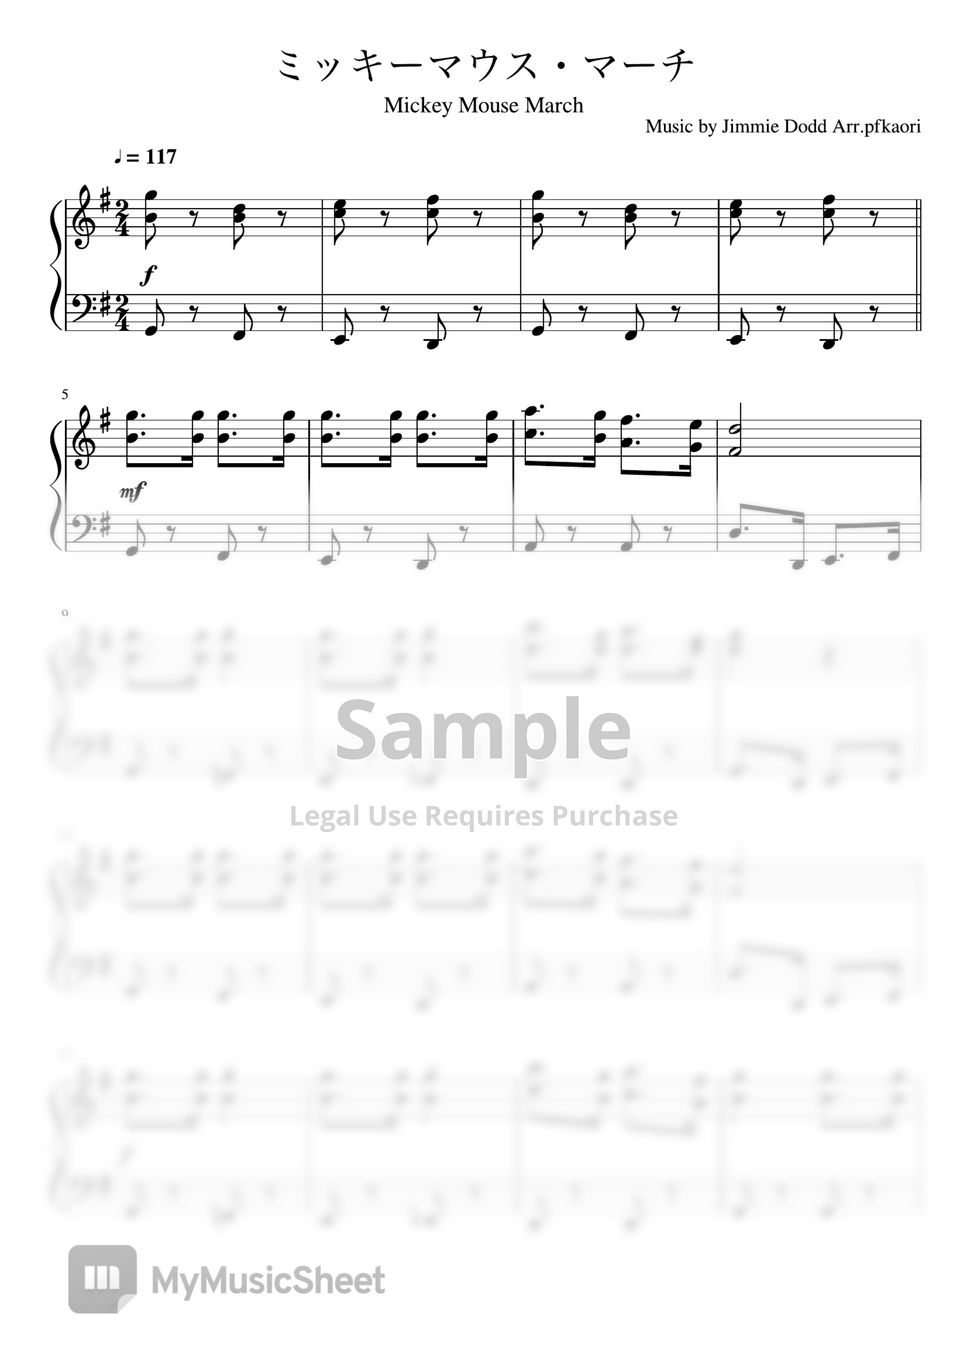 Jimmie Dodd - Mickey Mouse March (Gdur・Piano solo beginner 〜intermadiat) by pfkaori